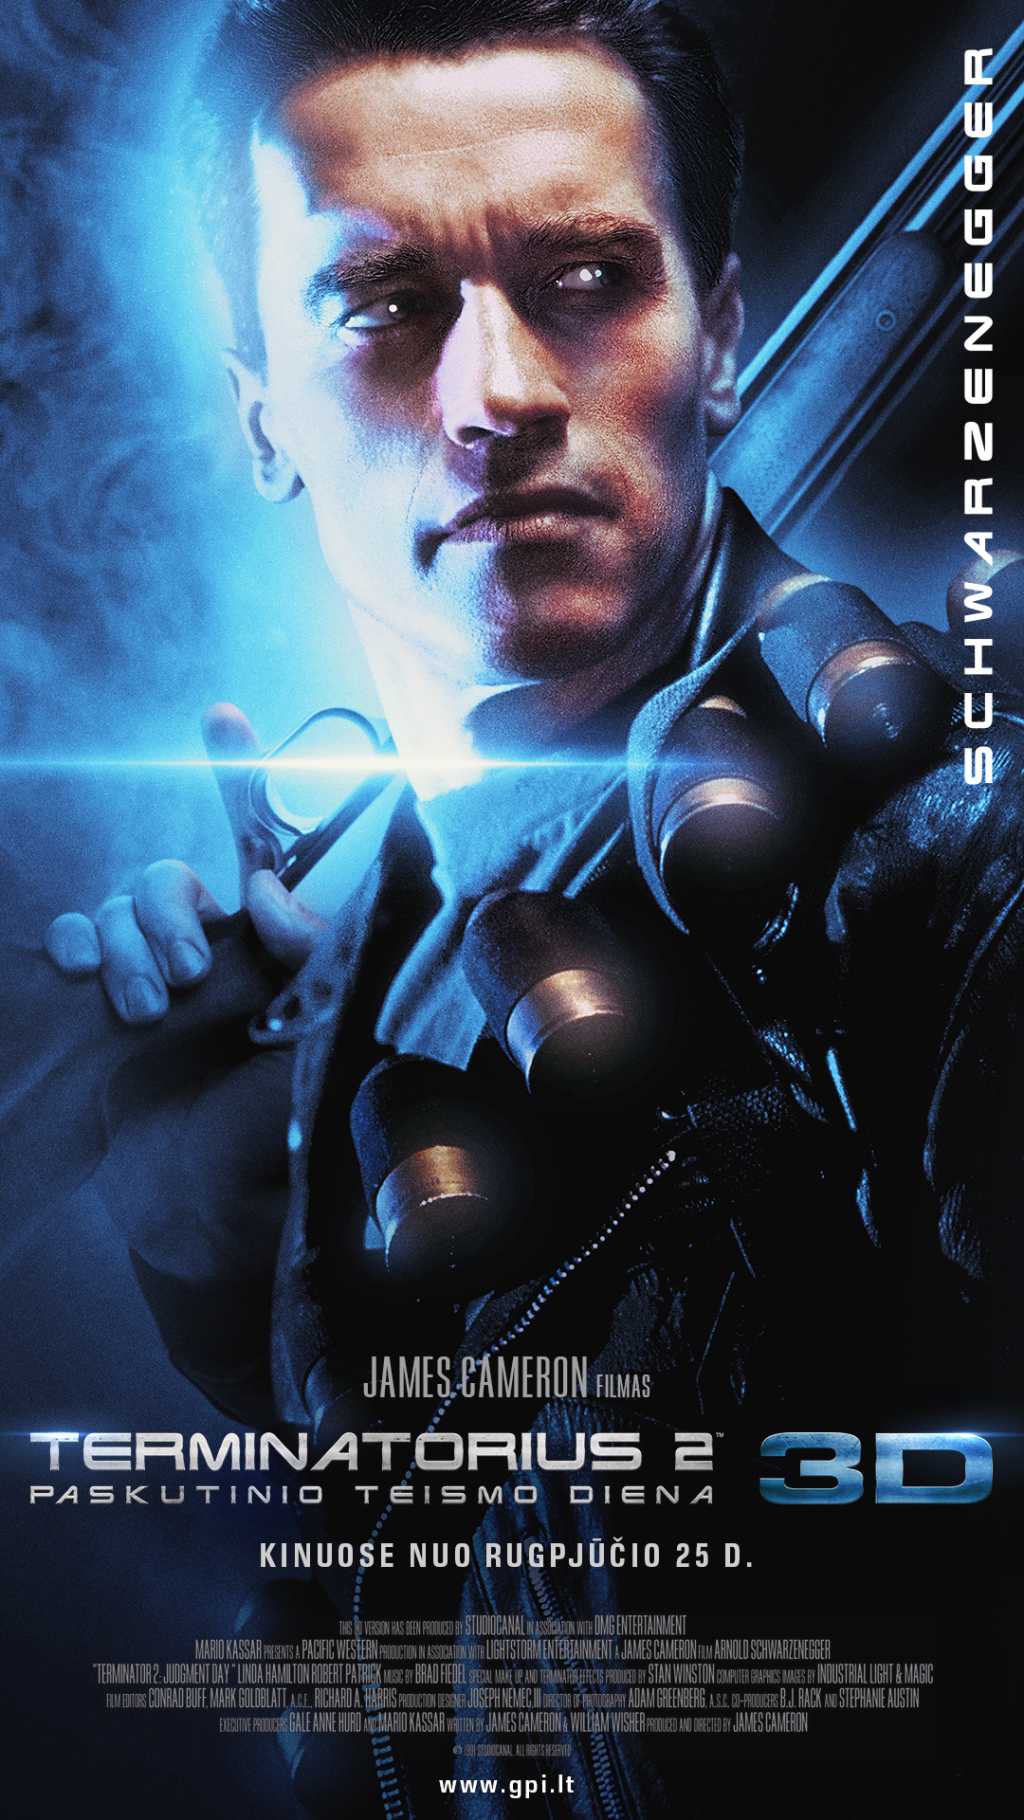 Terminatorius 2. Paskutinio teismo diena 3D (Terminator 2: Judgement Day)